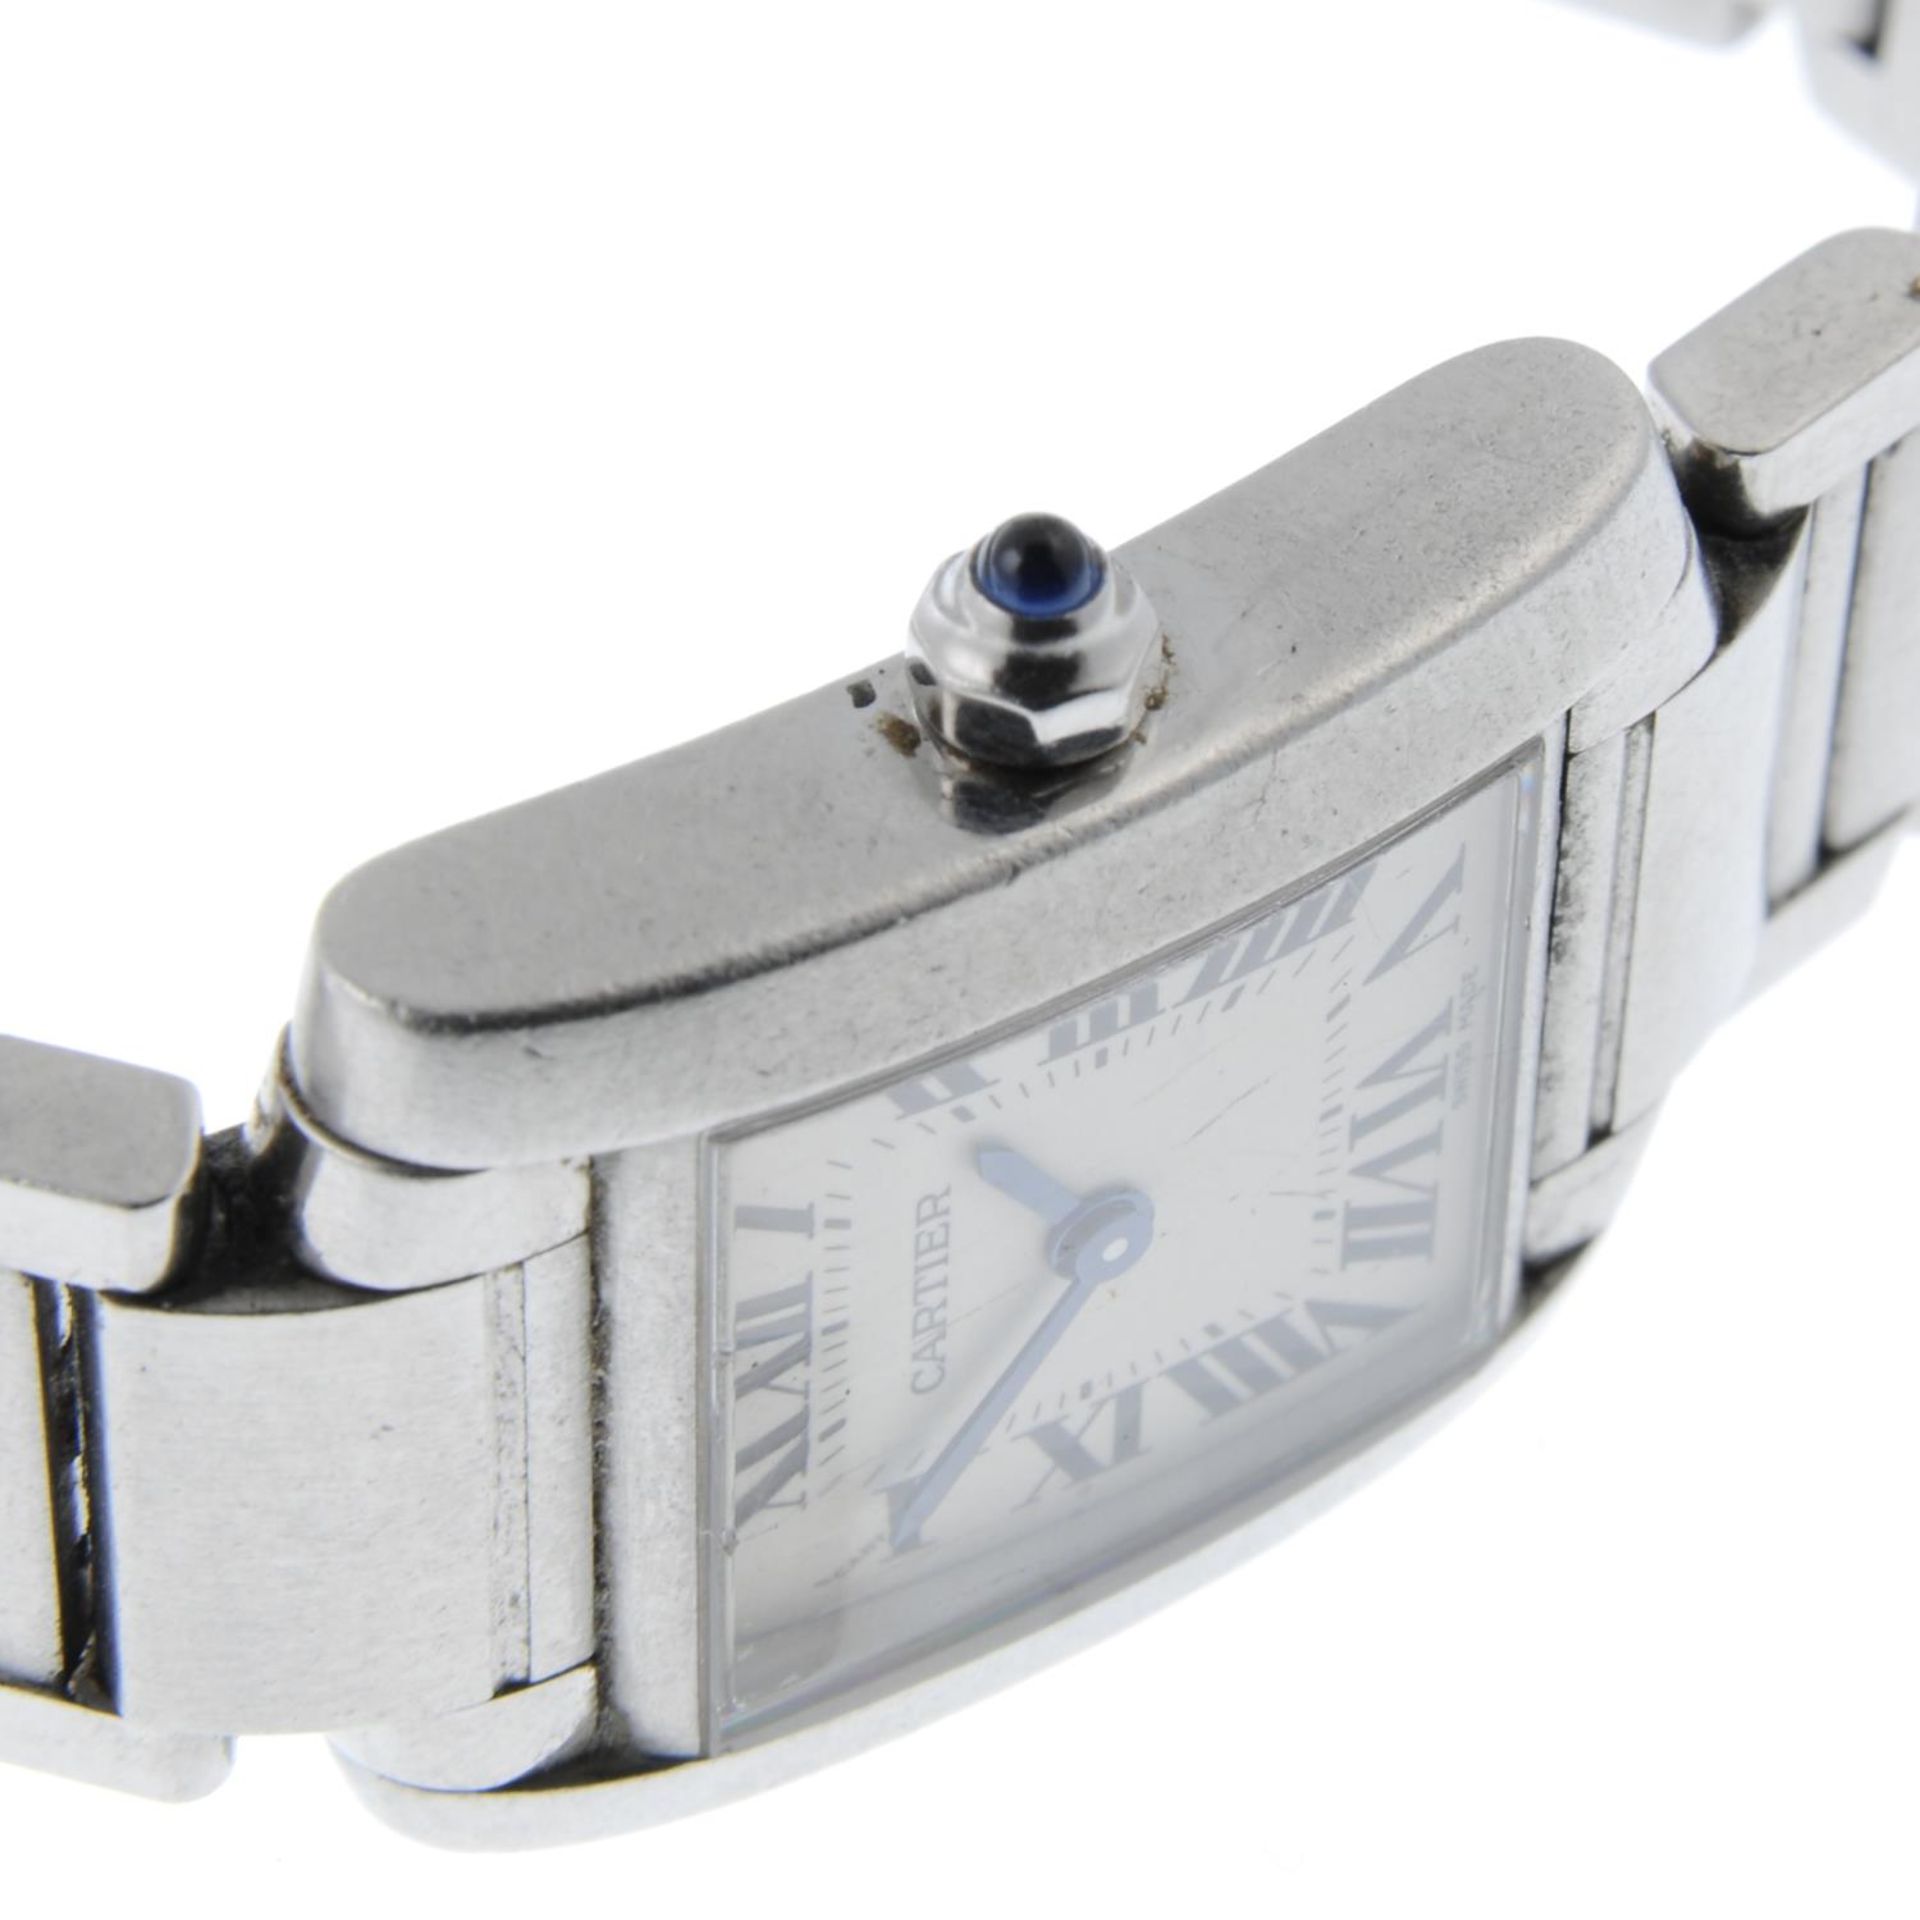 CARTIER - a lady's Tank Francaise bracelet watch. - Image 5 of 6